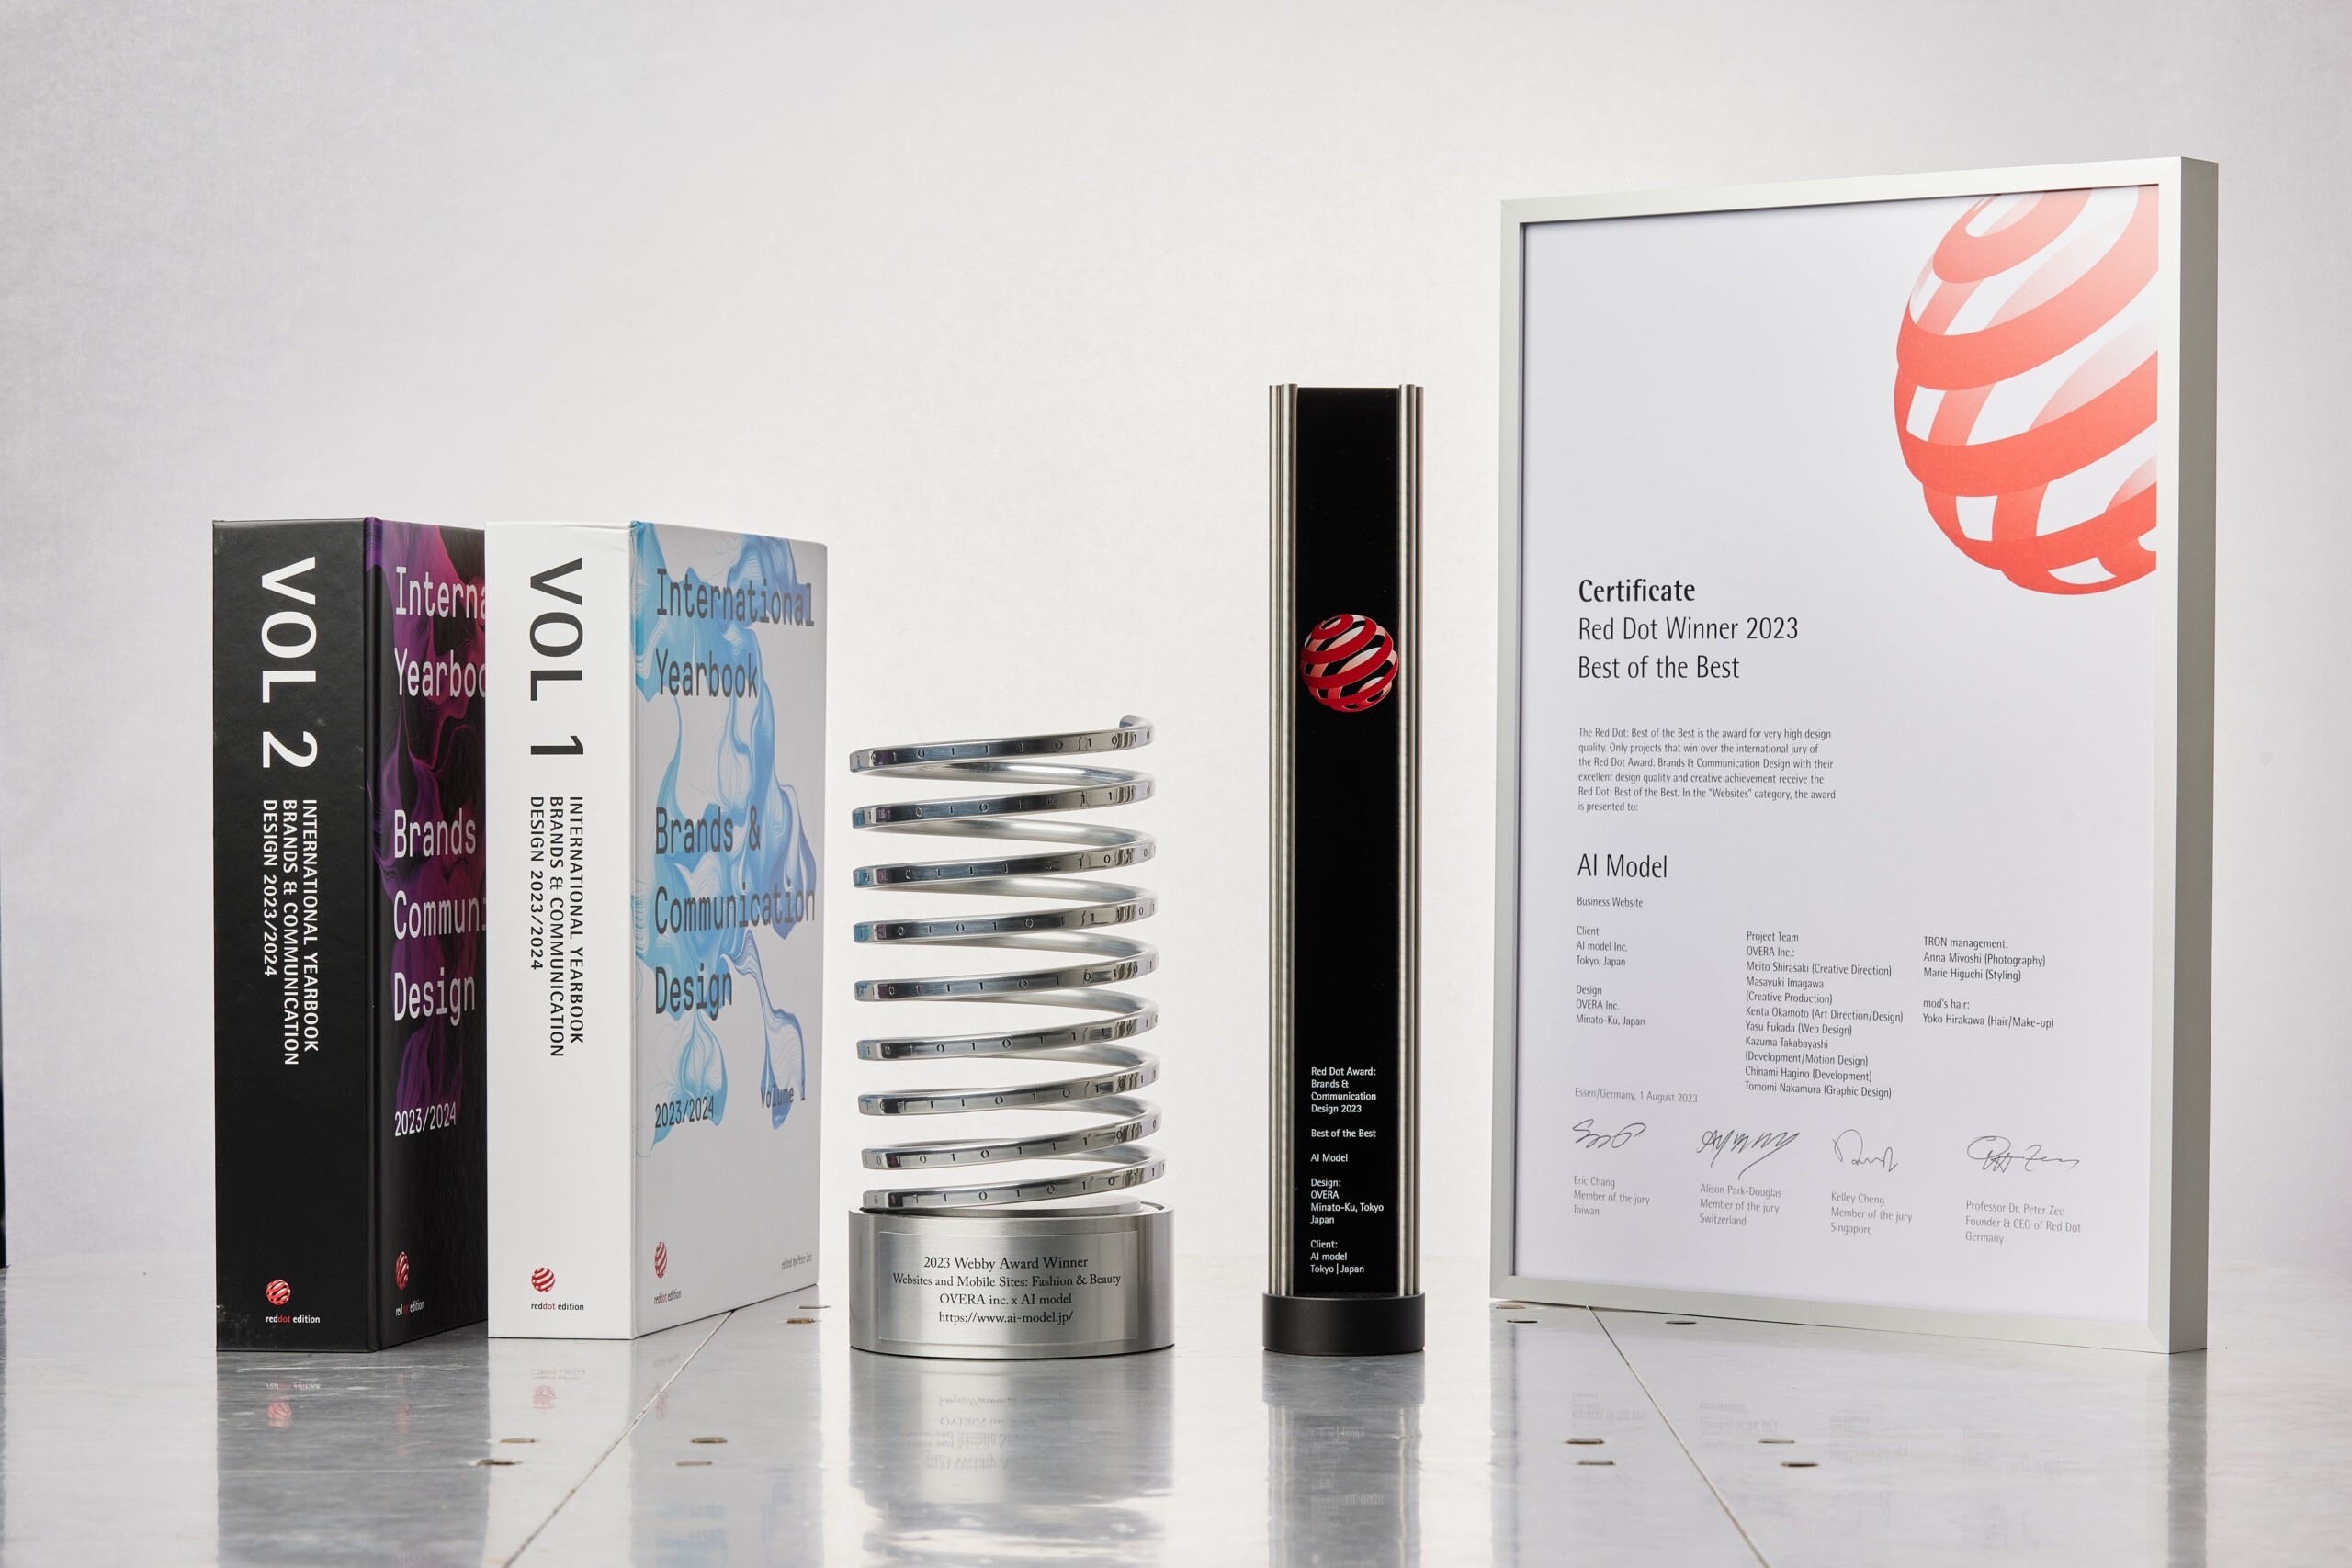 OVERAがデザインしたAI MODELが世界三大デザイン賞の一つ「Red Dot Design Award」にて 「Best of the Best」...